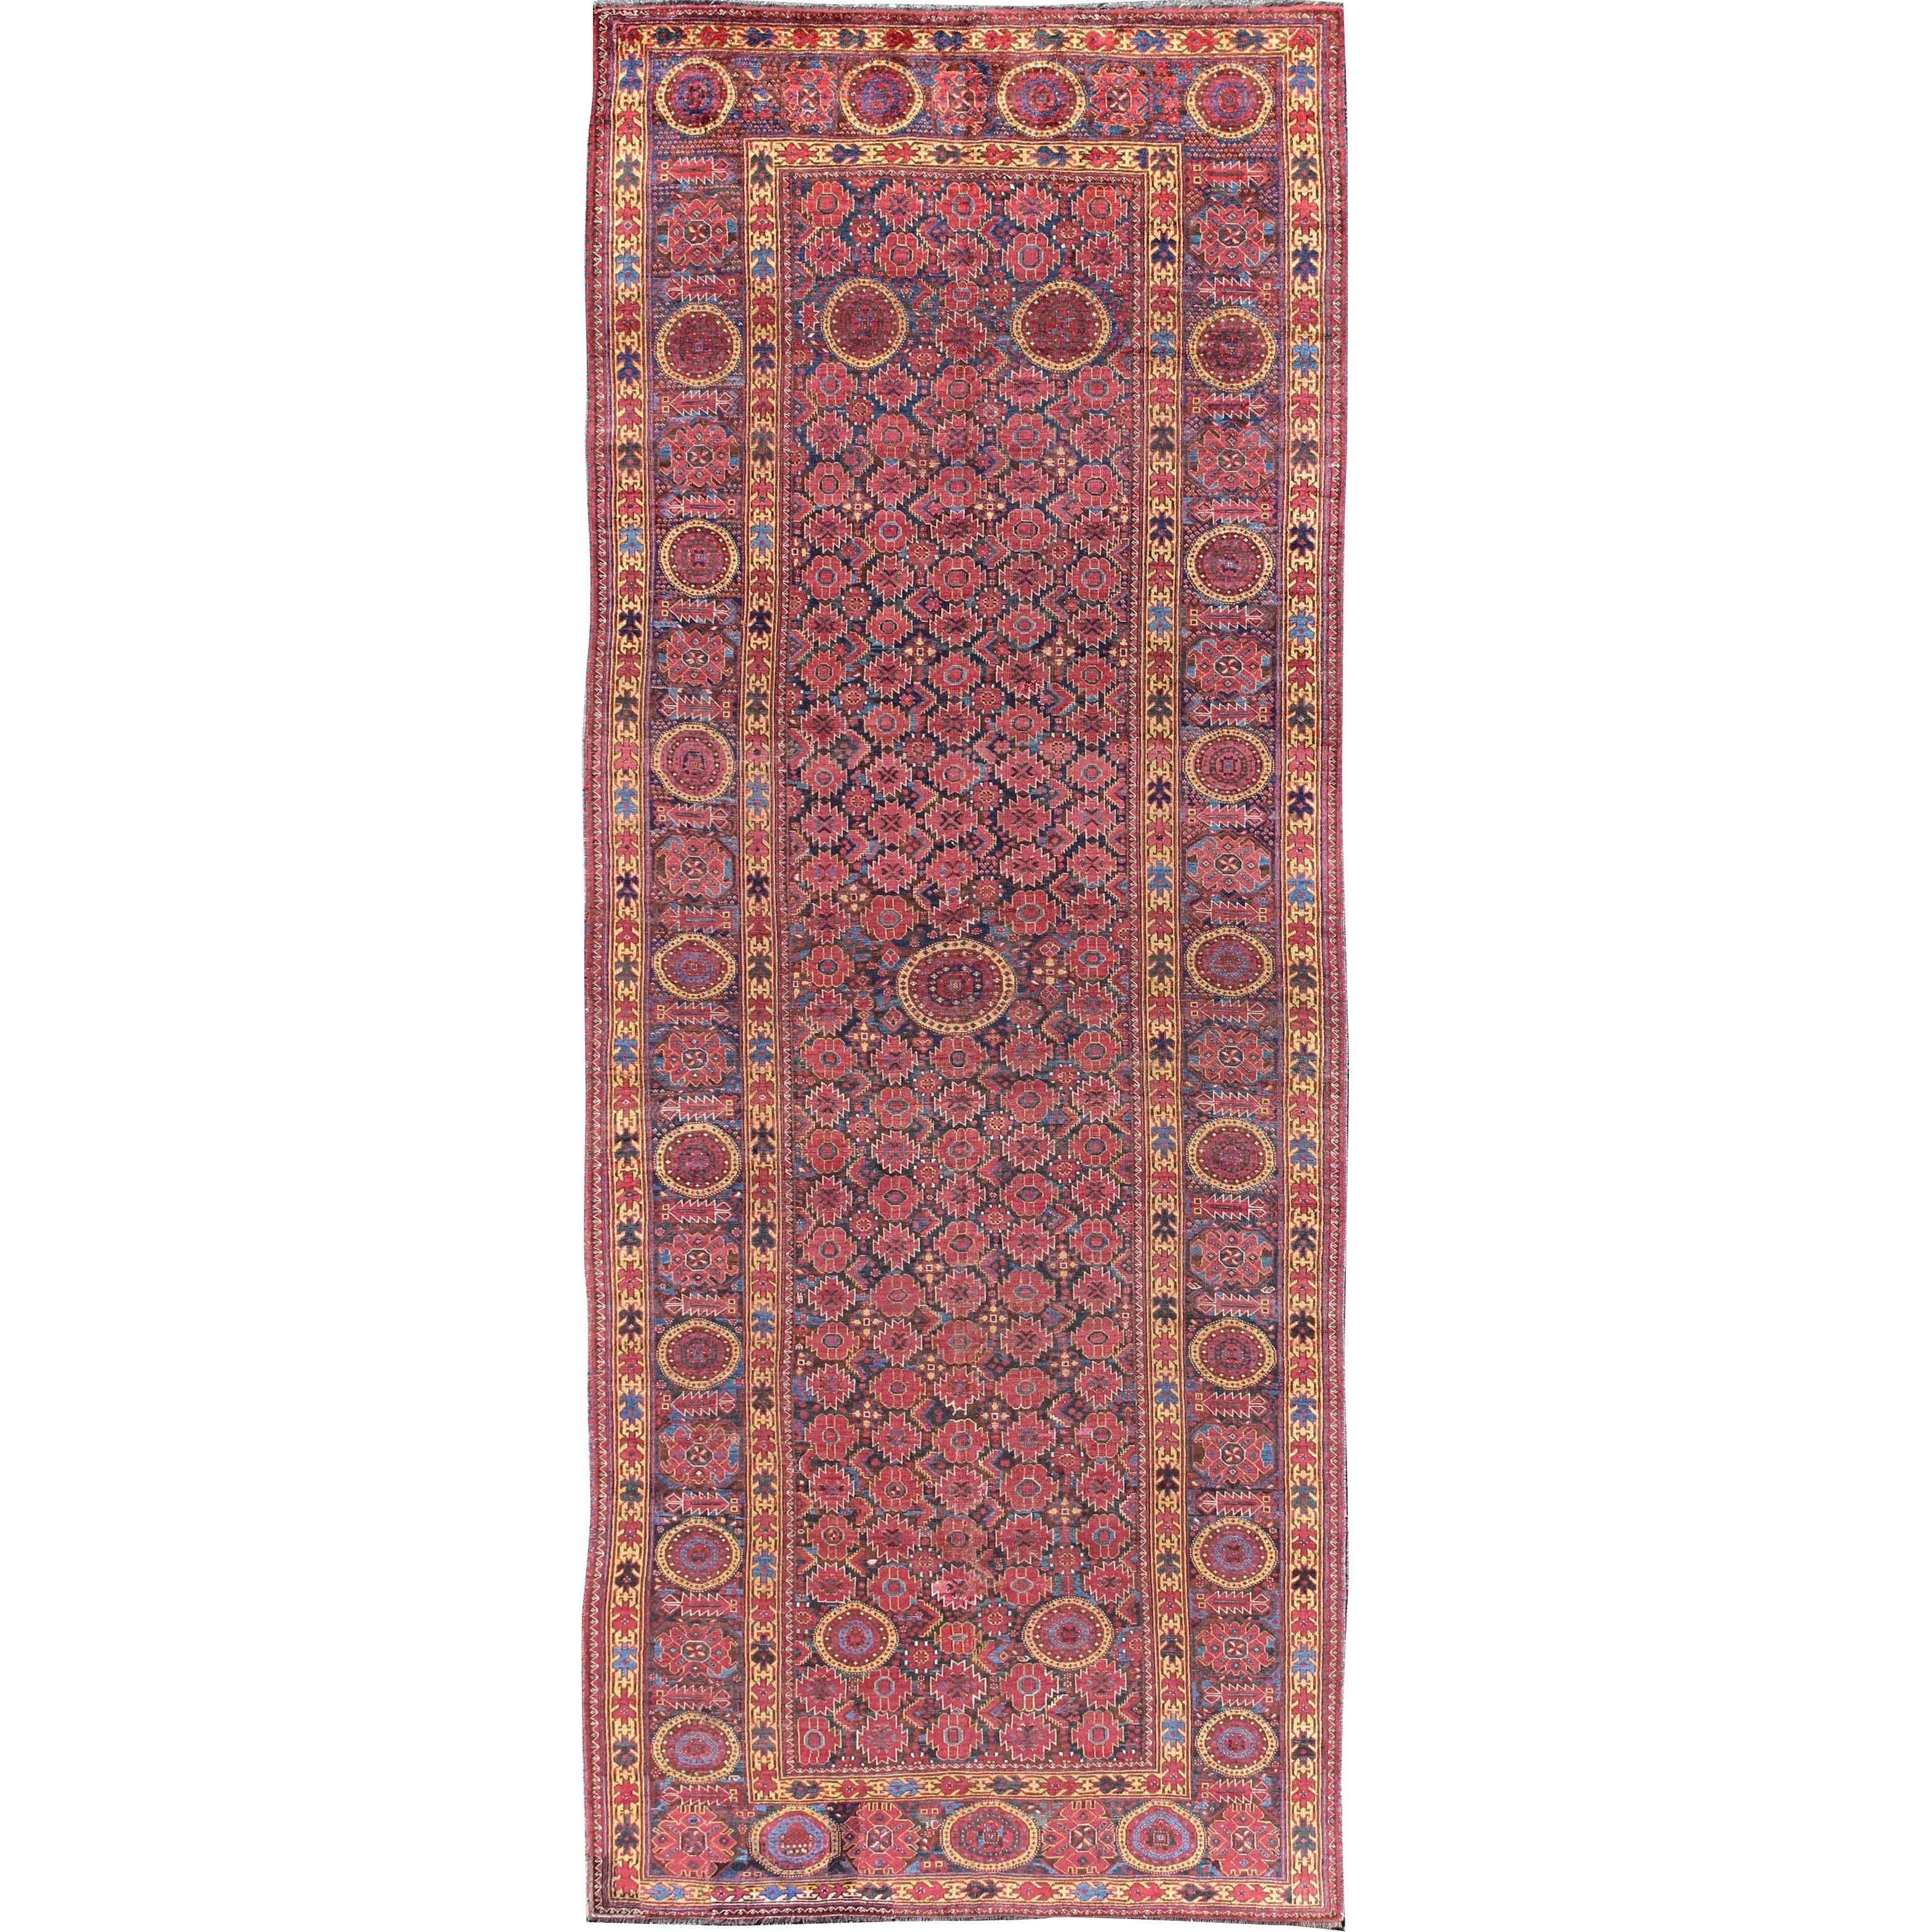 Rare 19th Century Antique Beshir Long Gallery Rug in Unique Colors